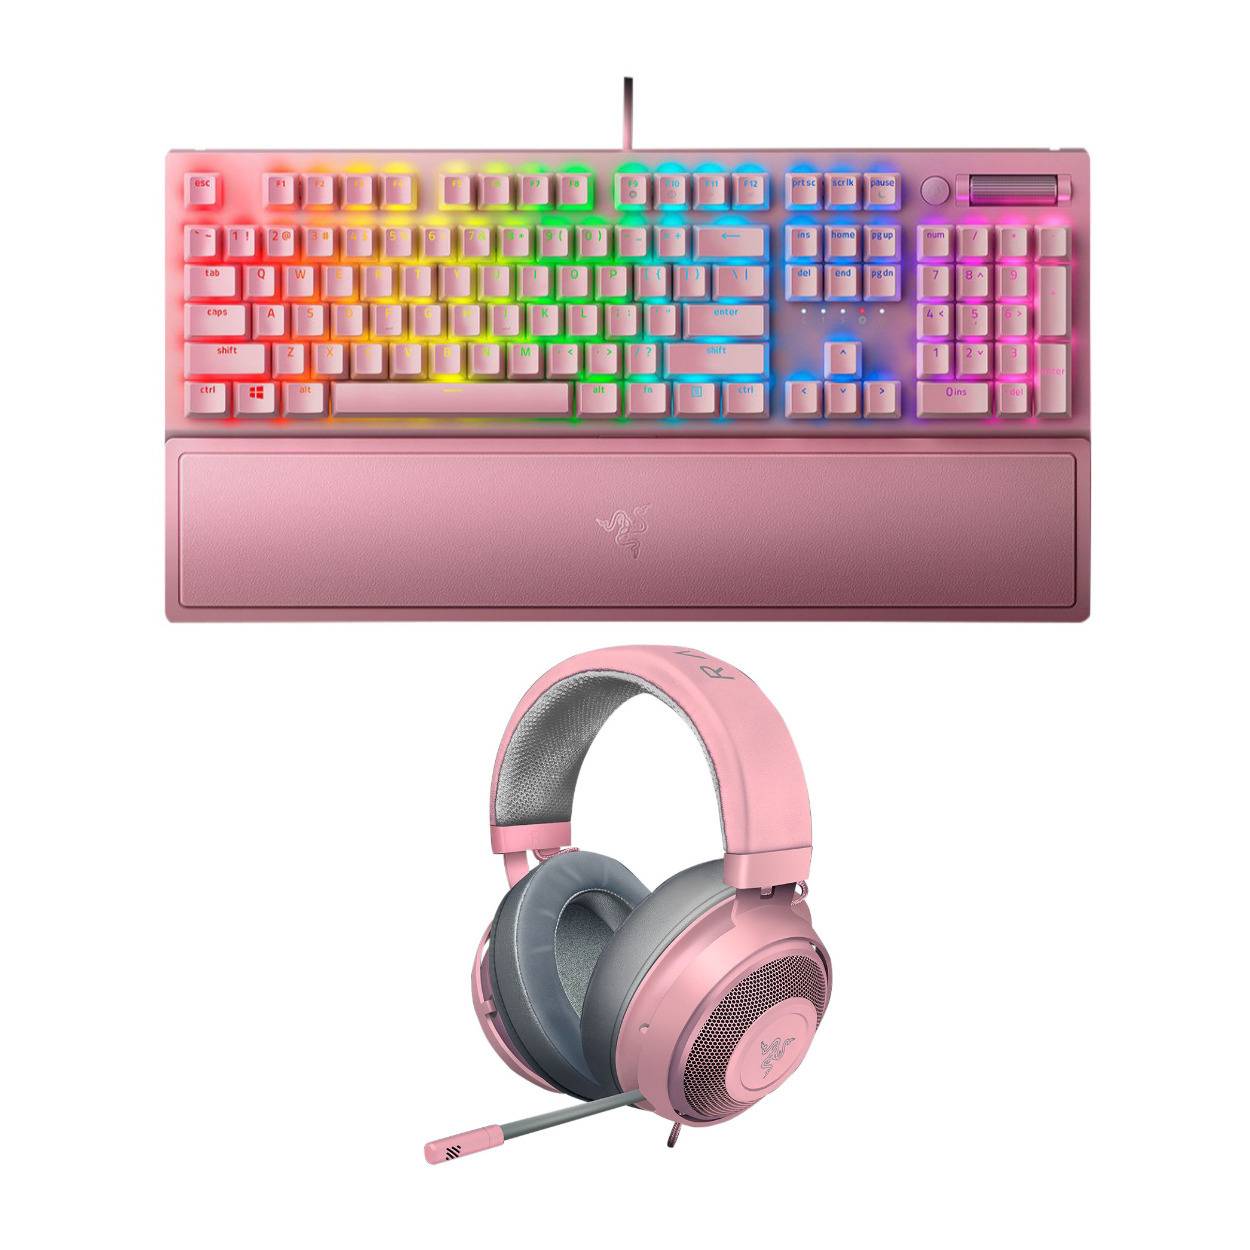 Razer Blackwidow V3 Wired Gaming Mechanical Green Switch Keyboard with Pink RGB Unicorn Headphones